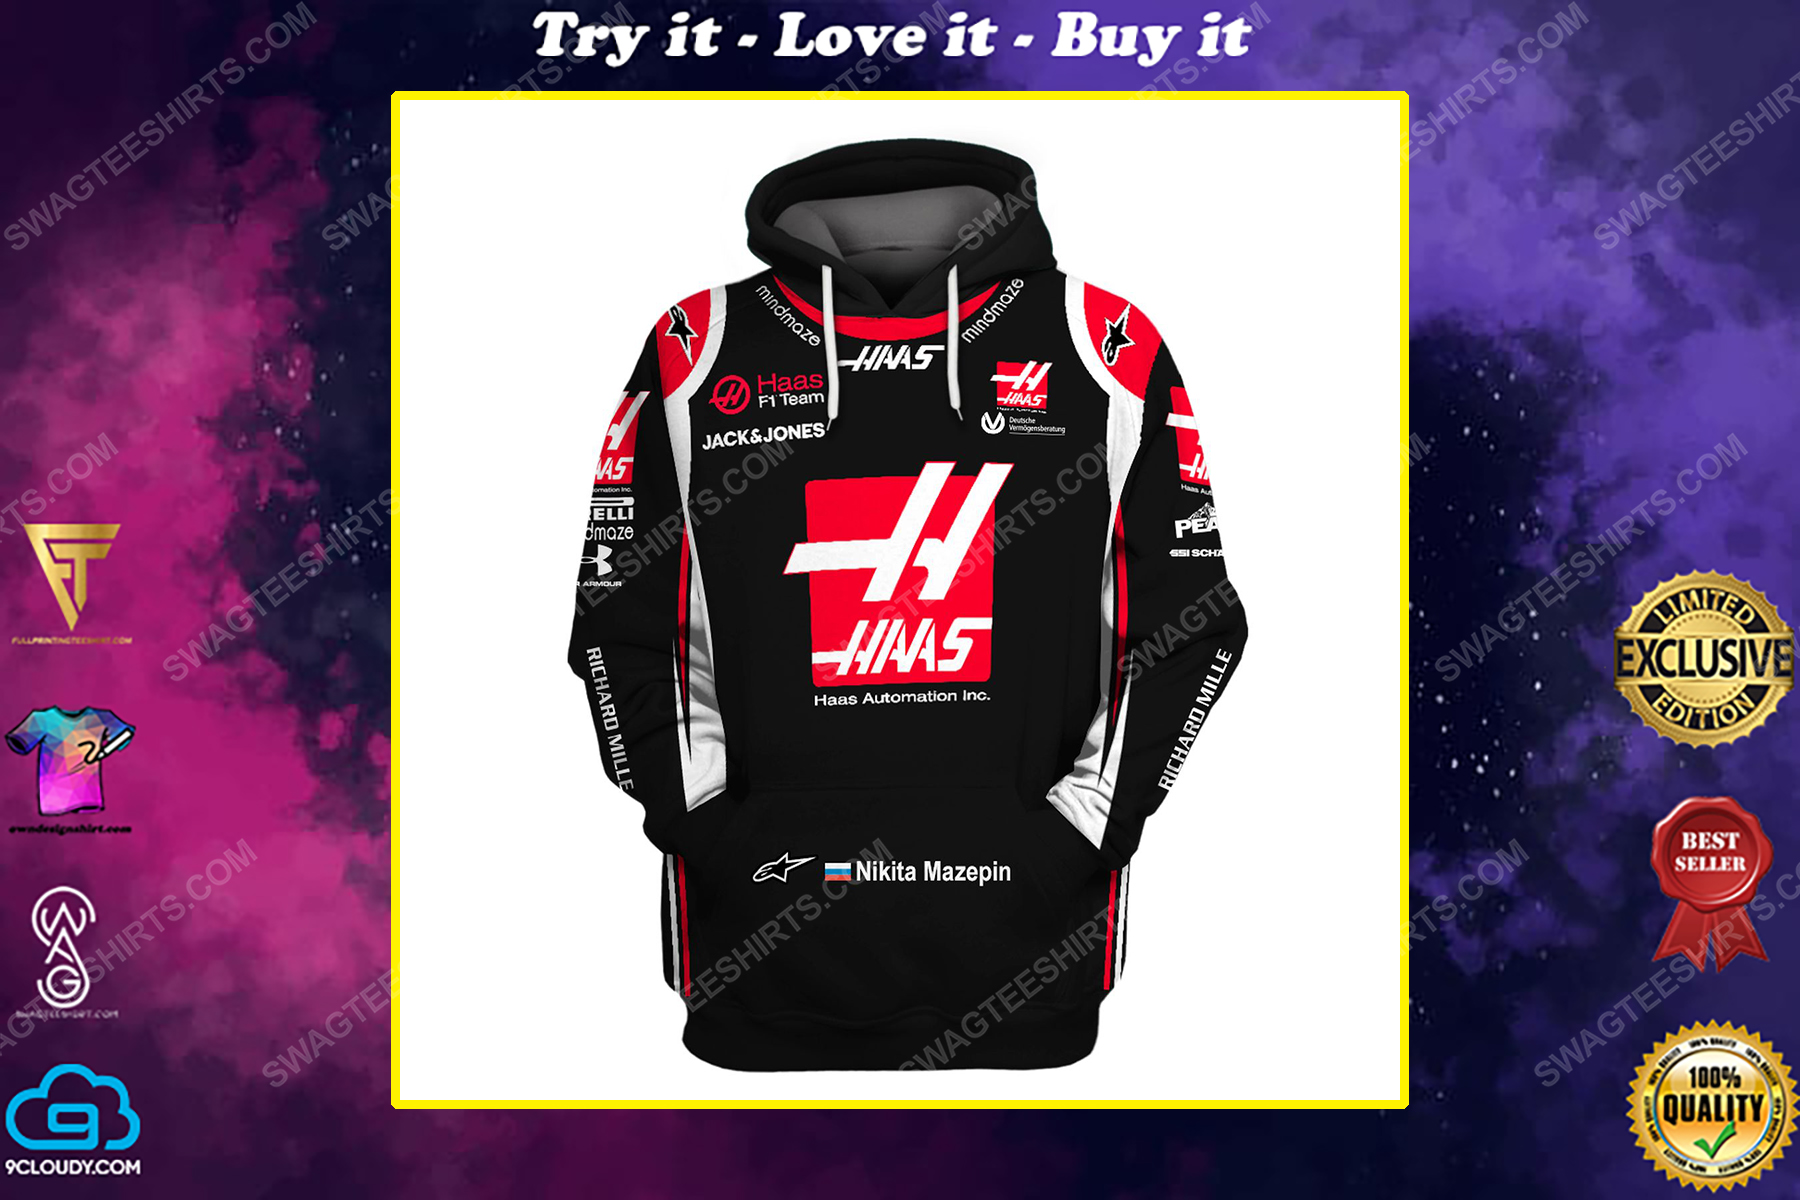 Haas automation inc racing team motorsport full printing shirt